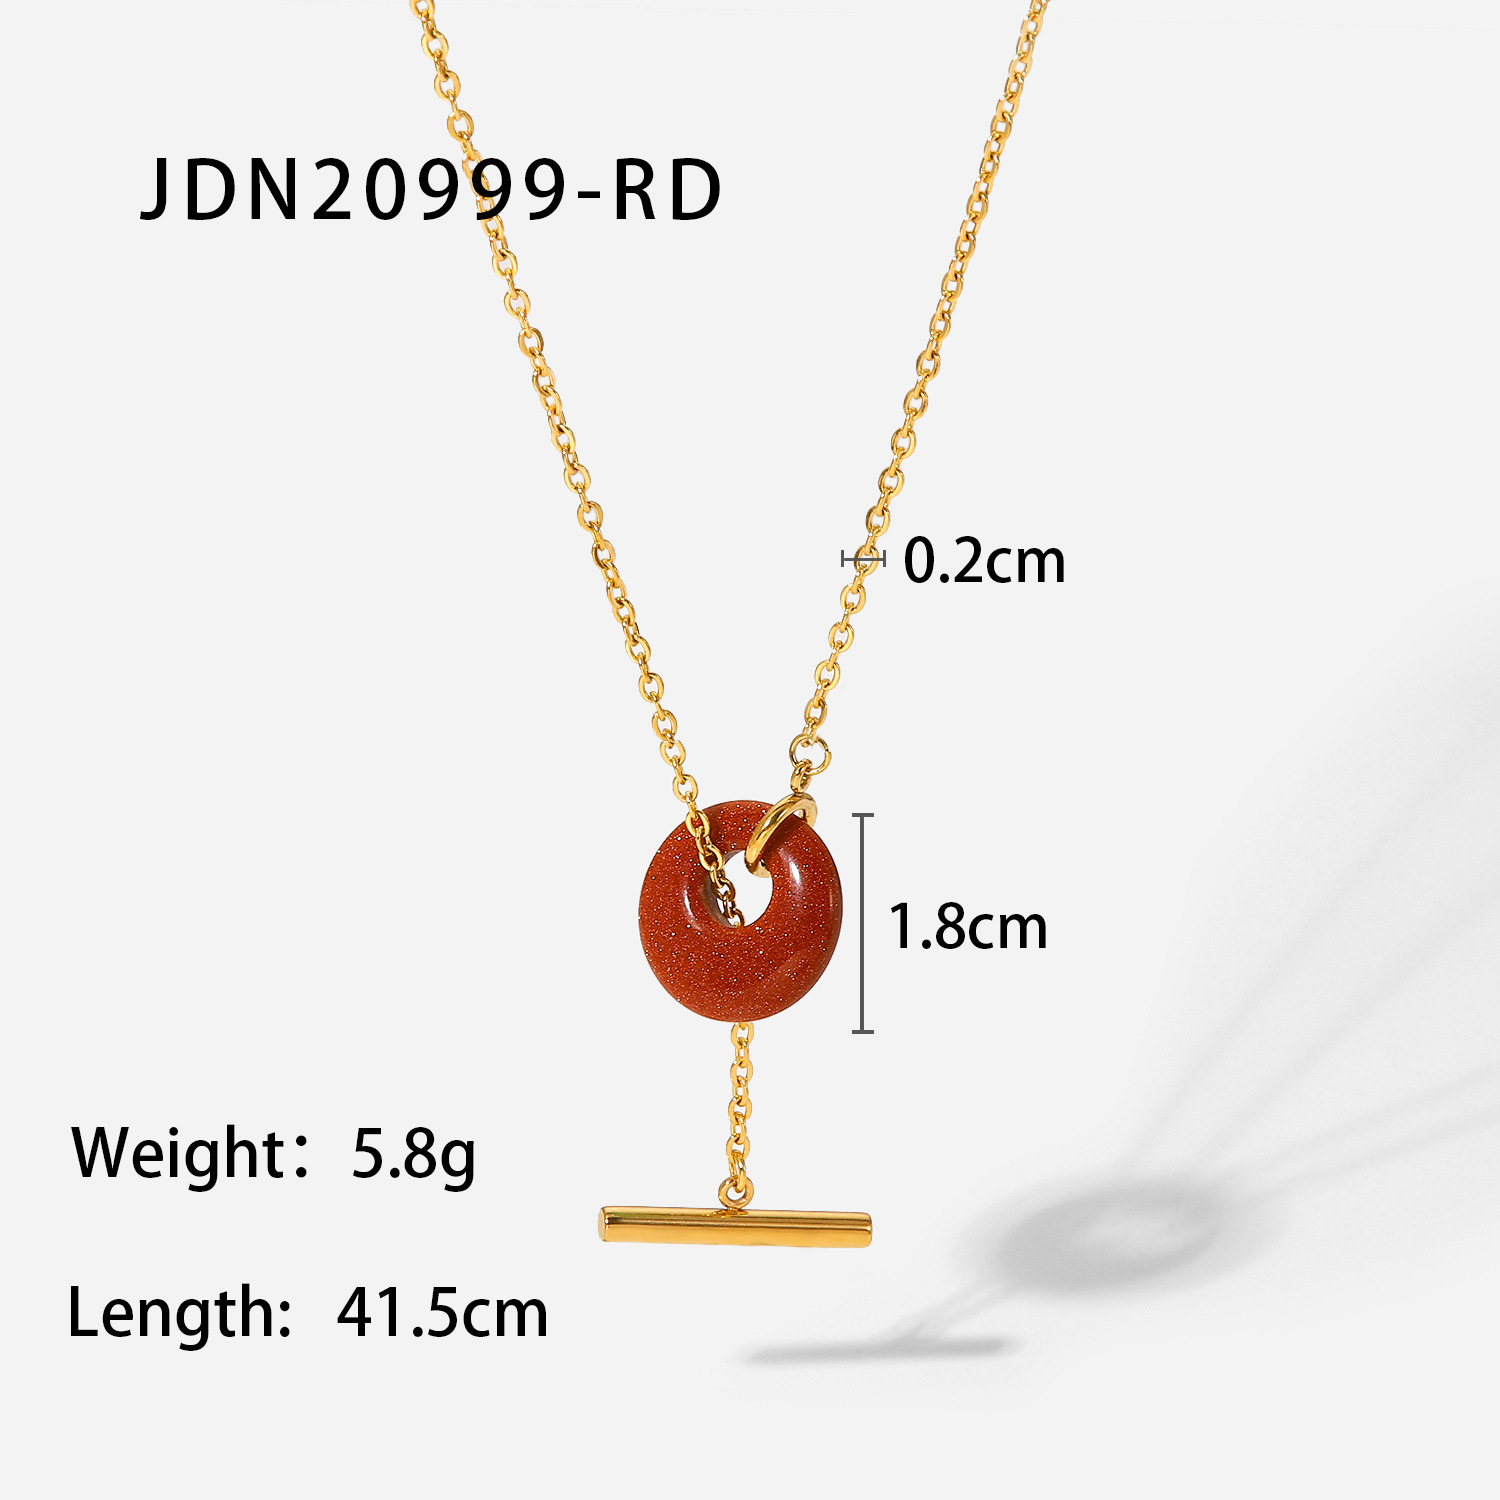 2:JDN20999-RD